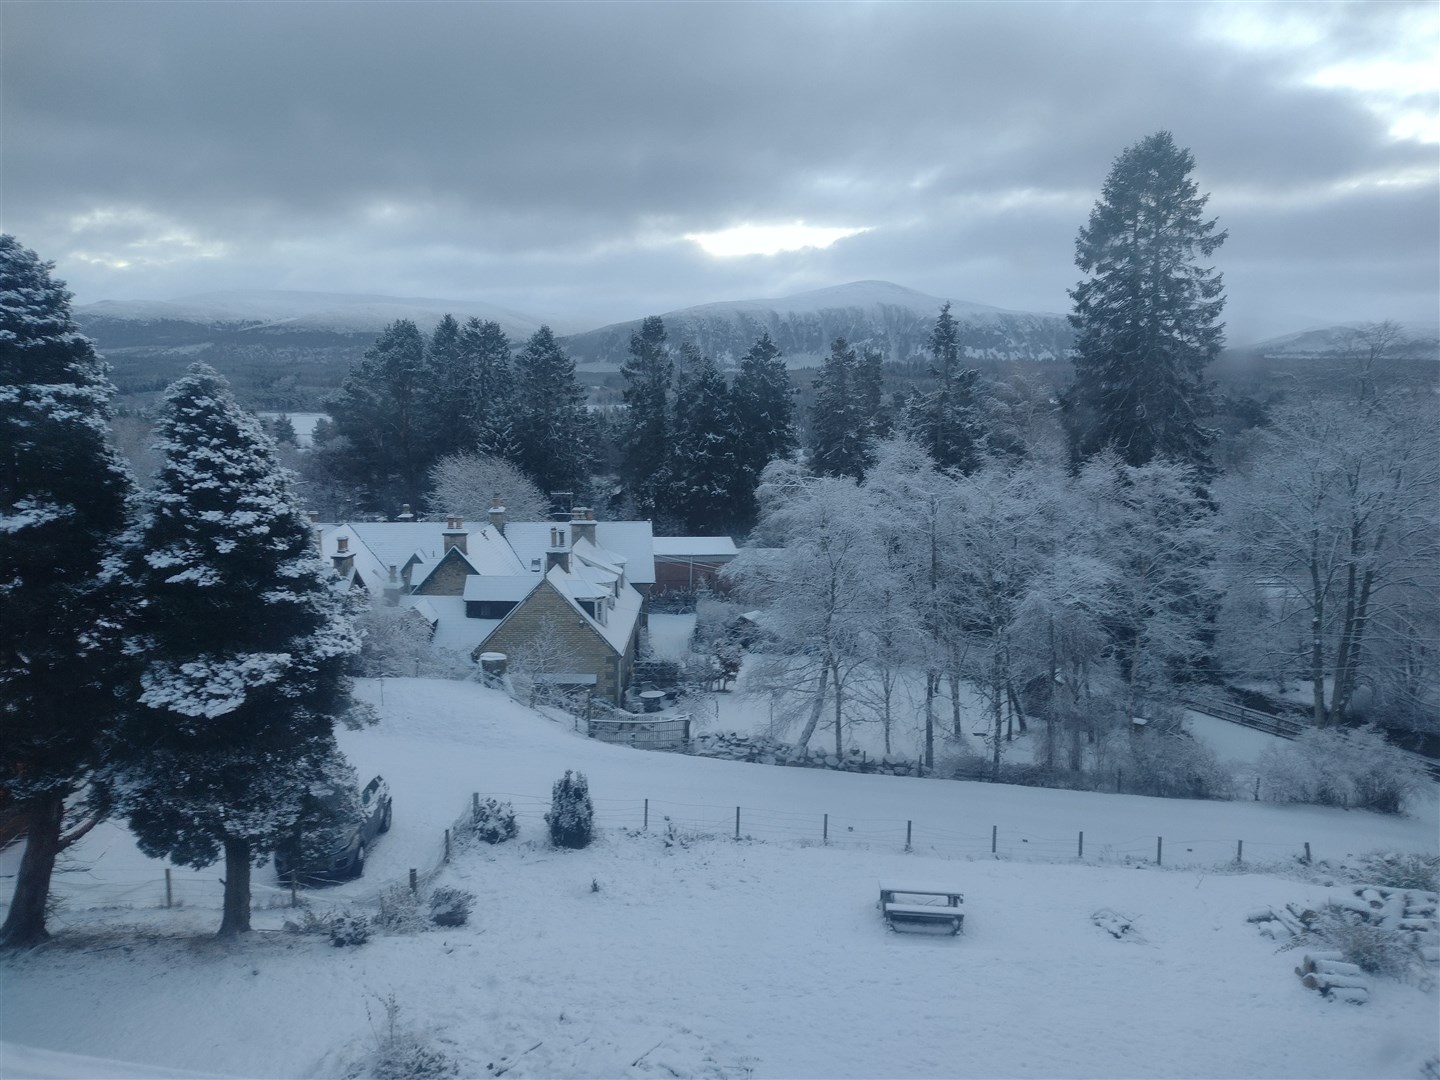 Snowy conditions in Kincraig.